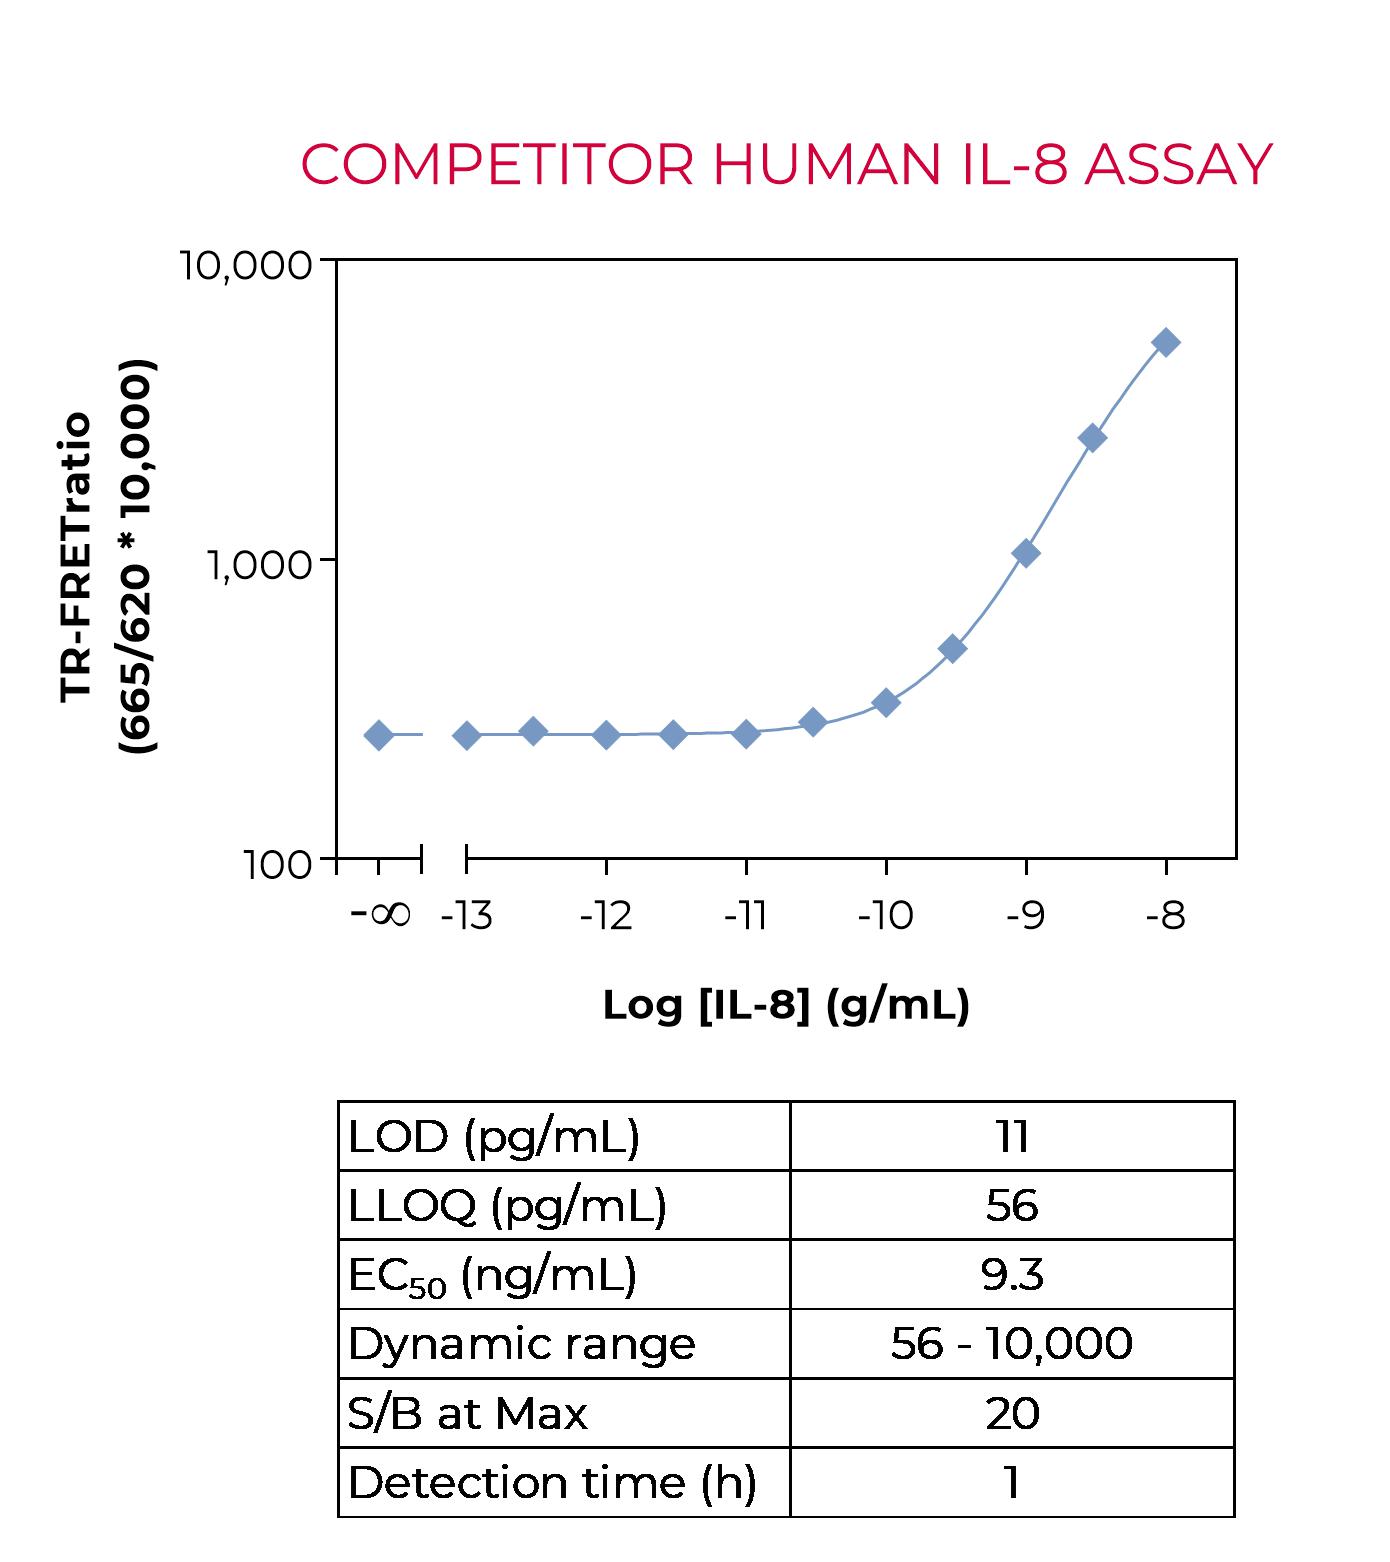 Competitor Human IL-8 assay